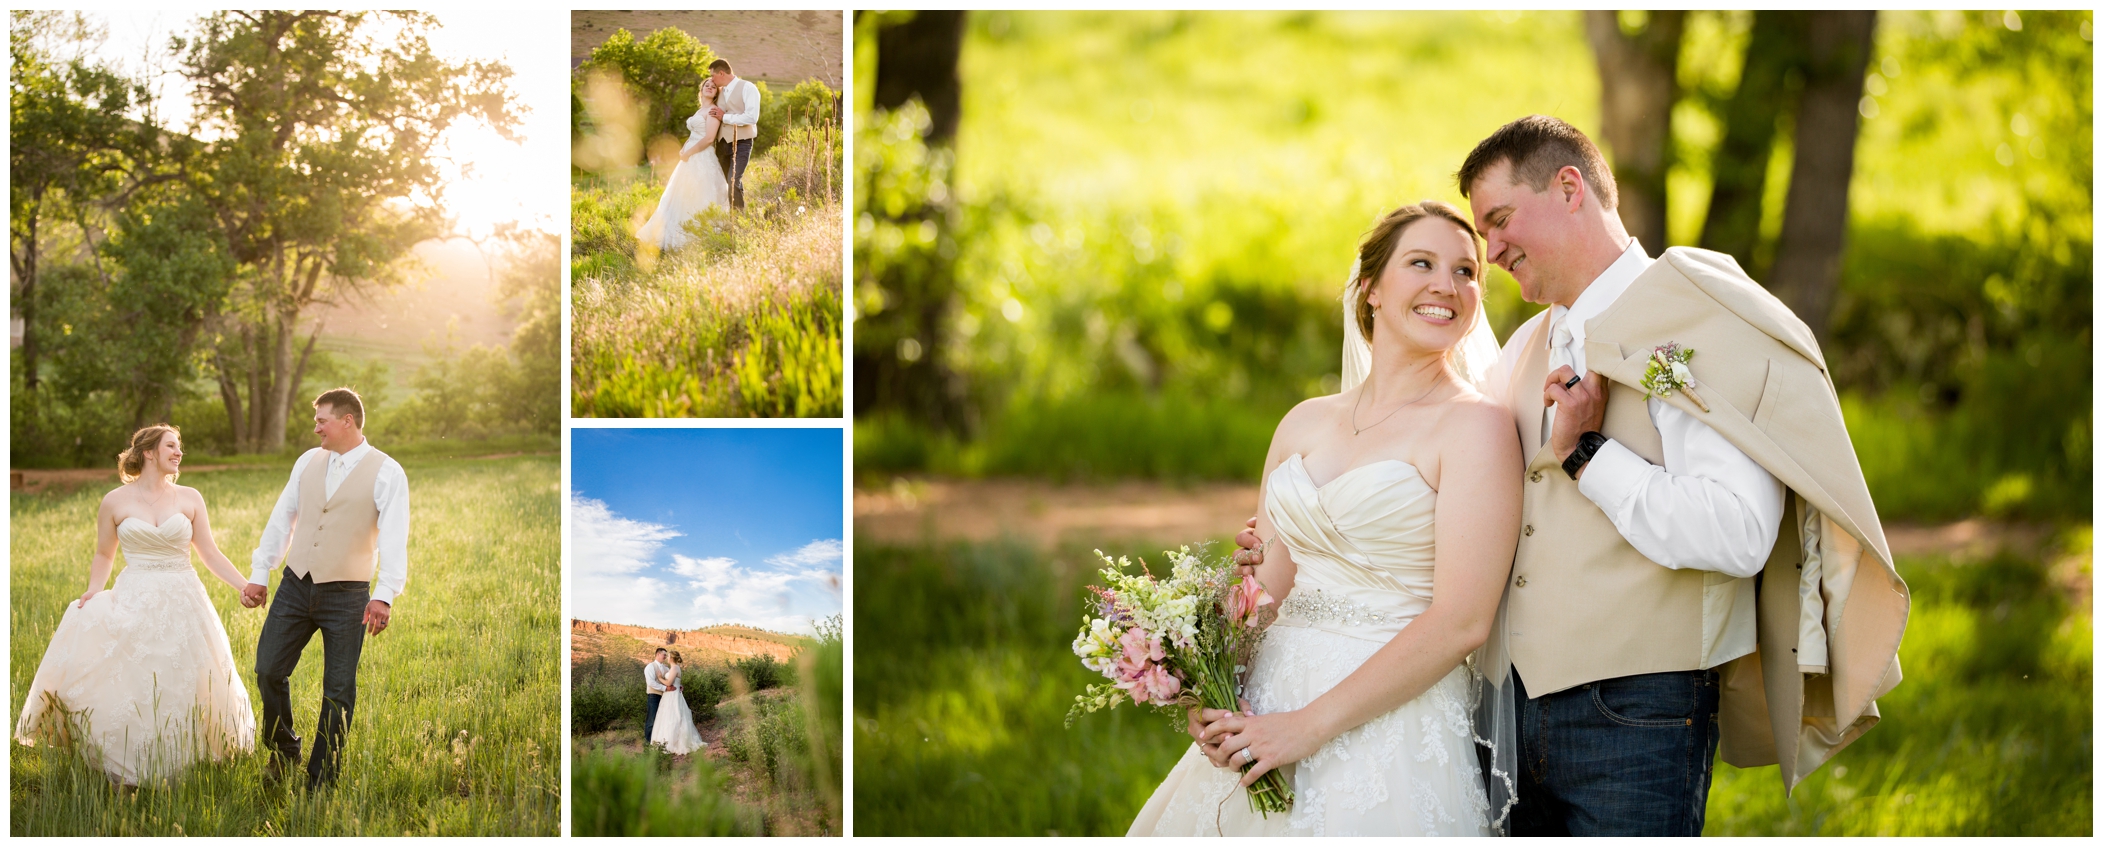 Ellis Ranch Colorado wedding by Loveland photographer Plum Pretty Photo 